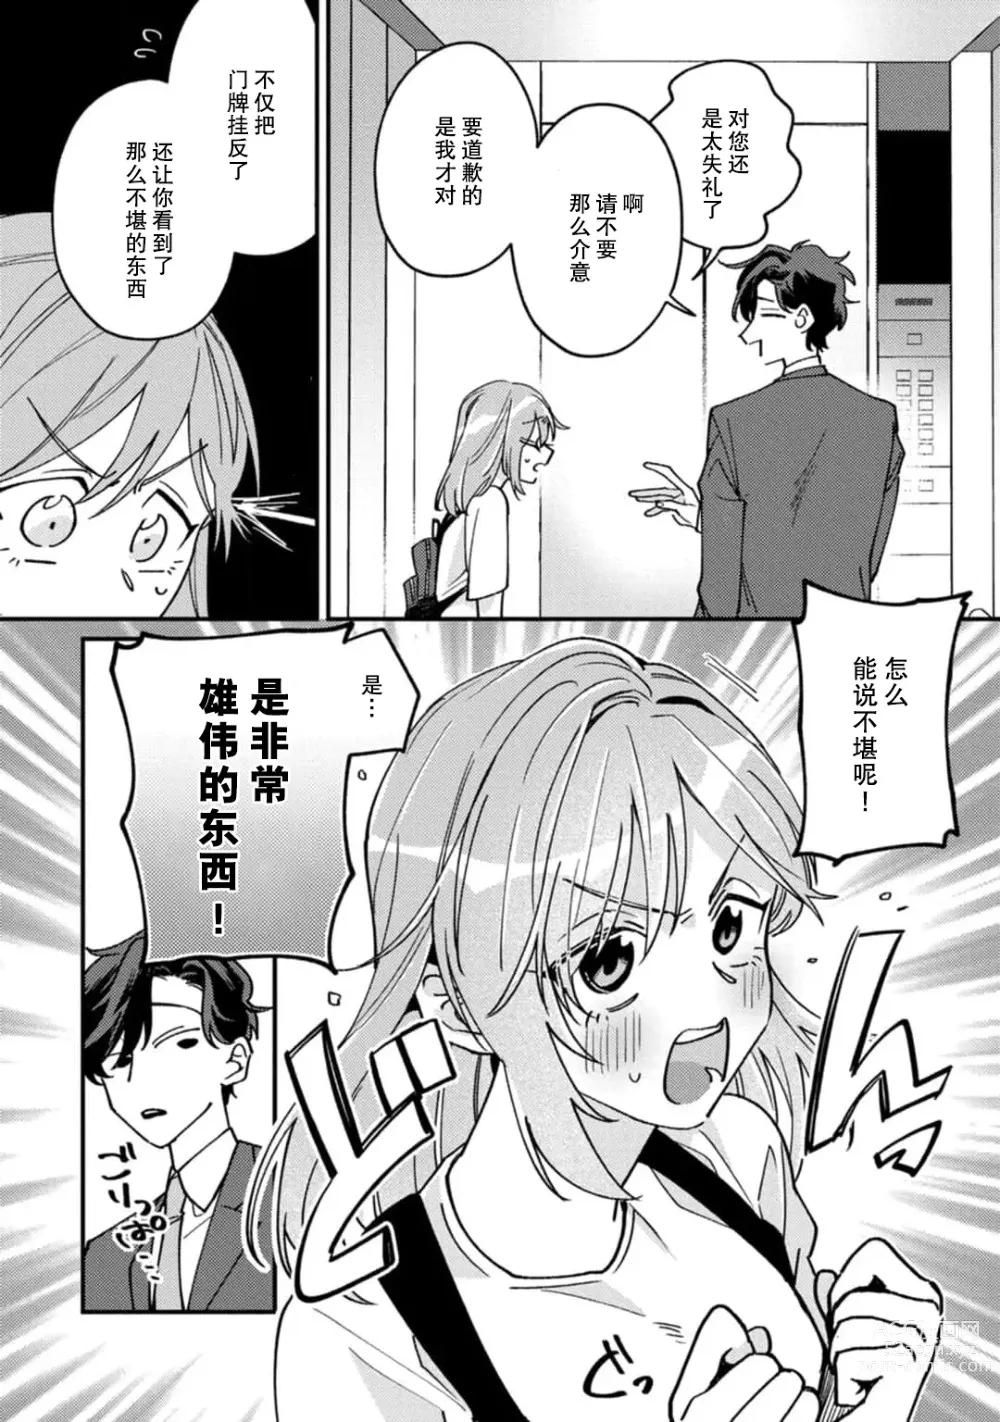 Page 11 of manga 请勿打扰！酒店客房服务员被常客绅士夺走第一次 1-3